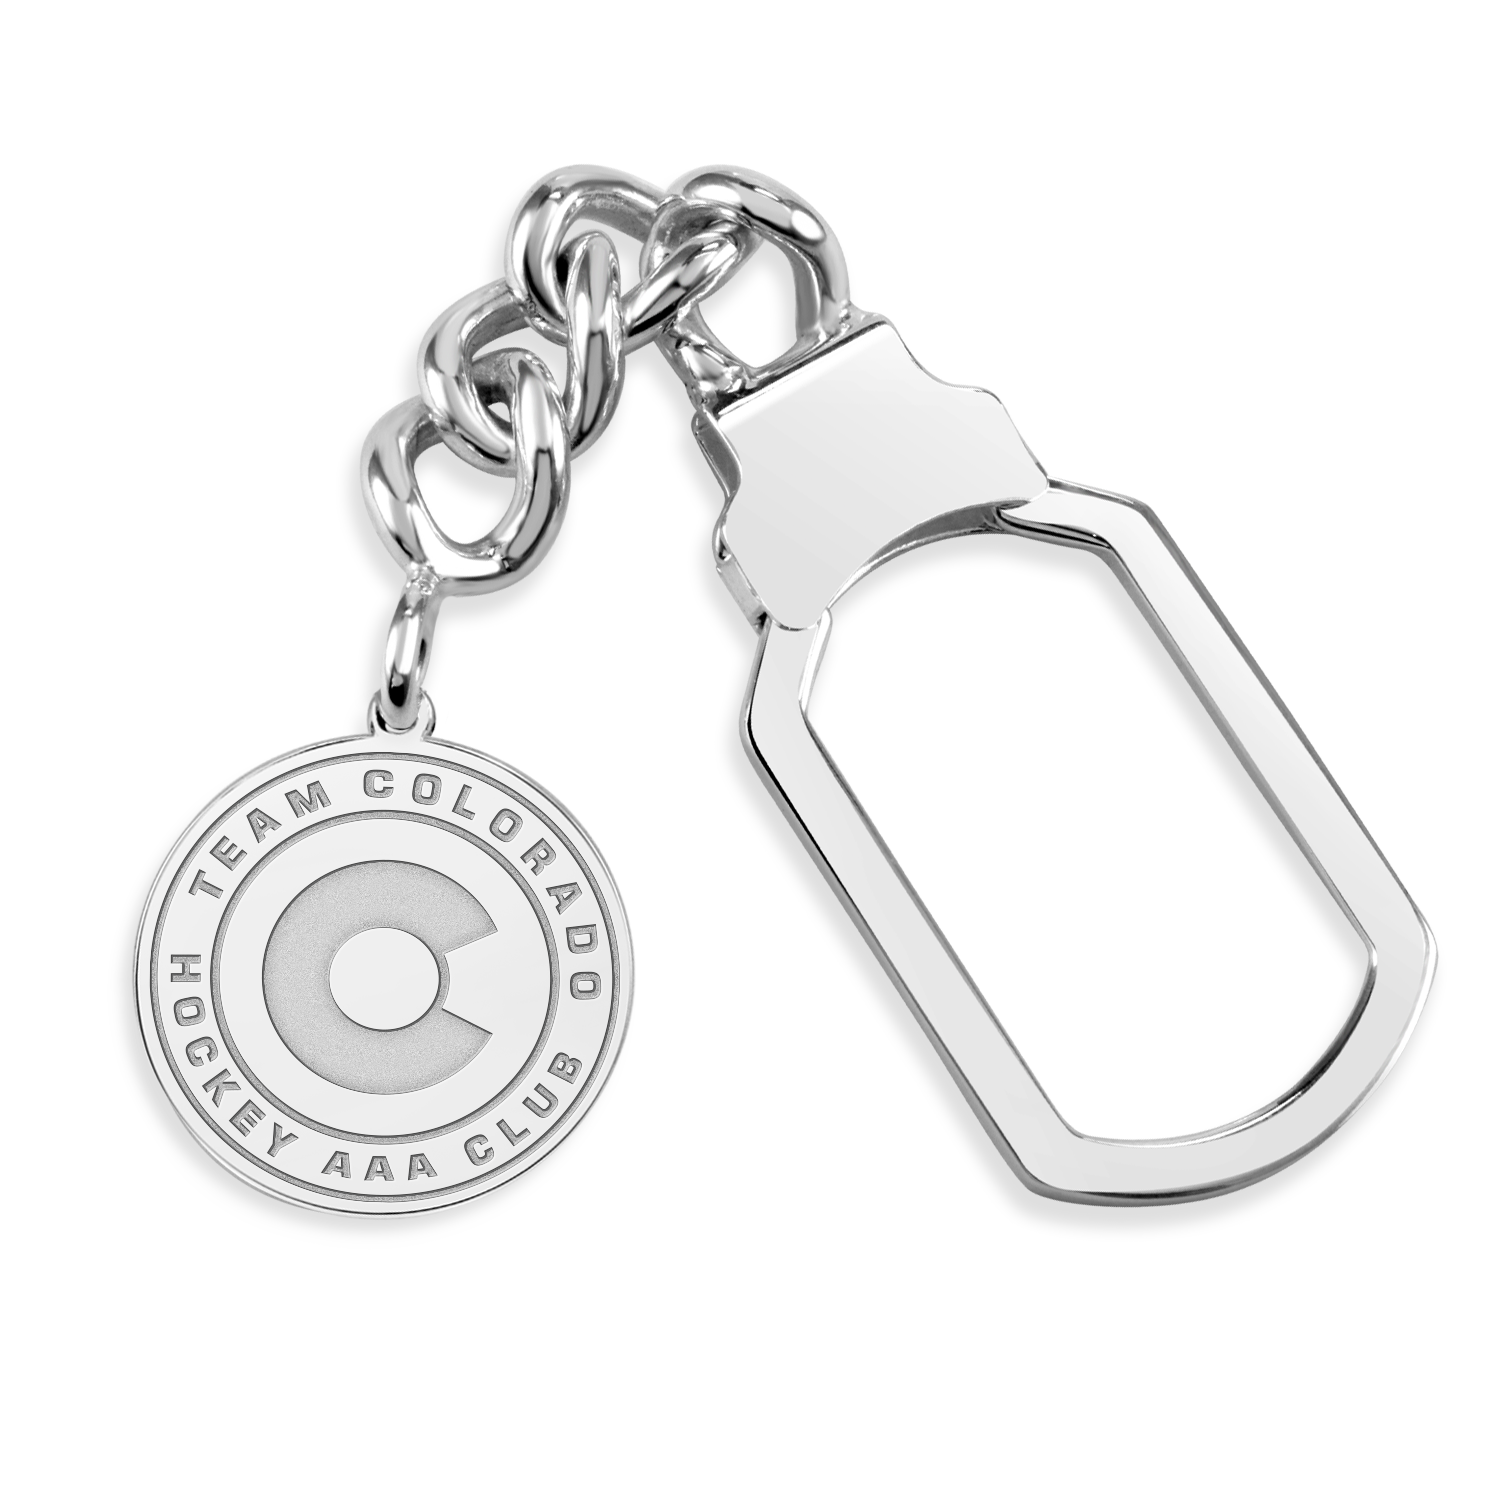 Team Colorado Tension Lock Key Chain Disc